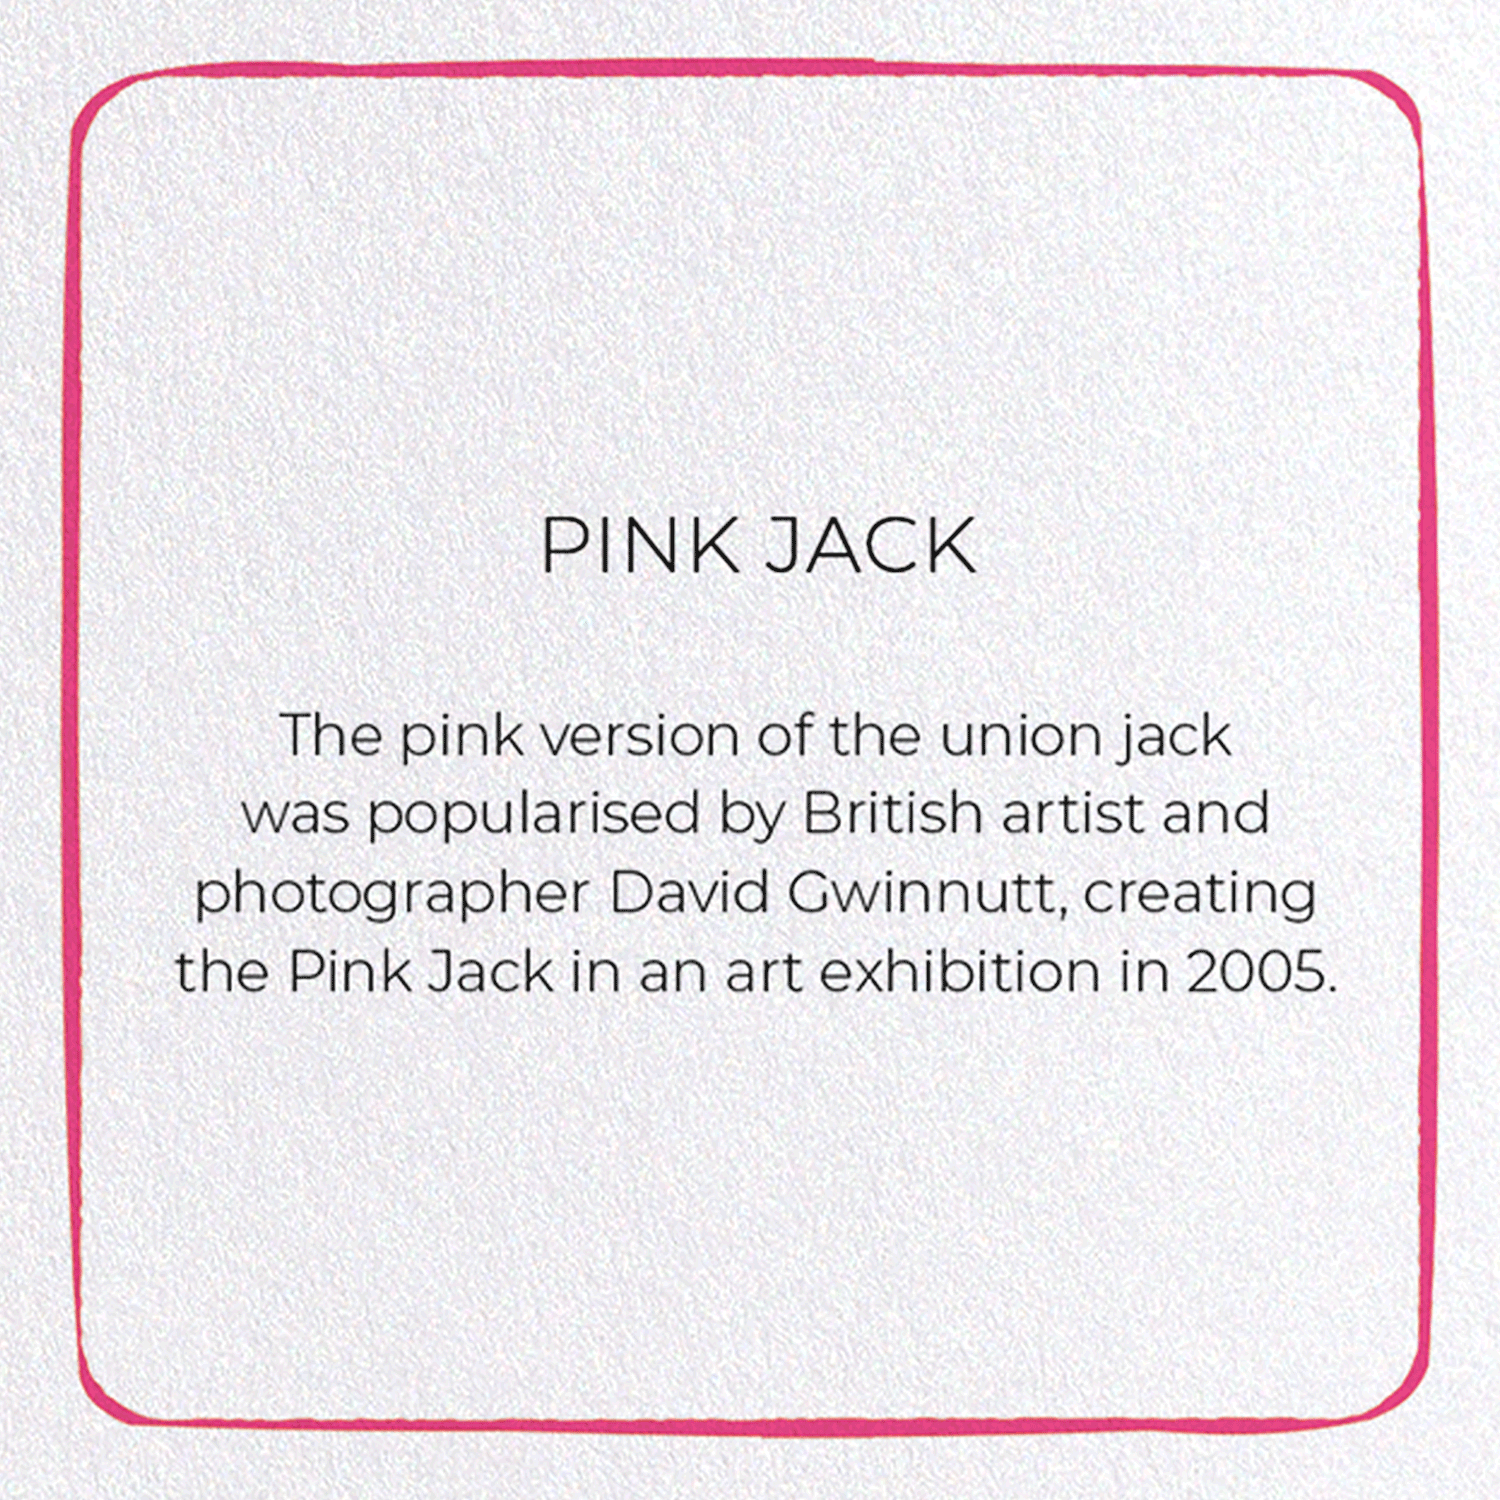 PINK JACK: Colourblock Greeting Card